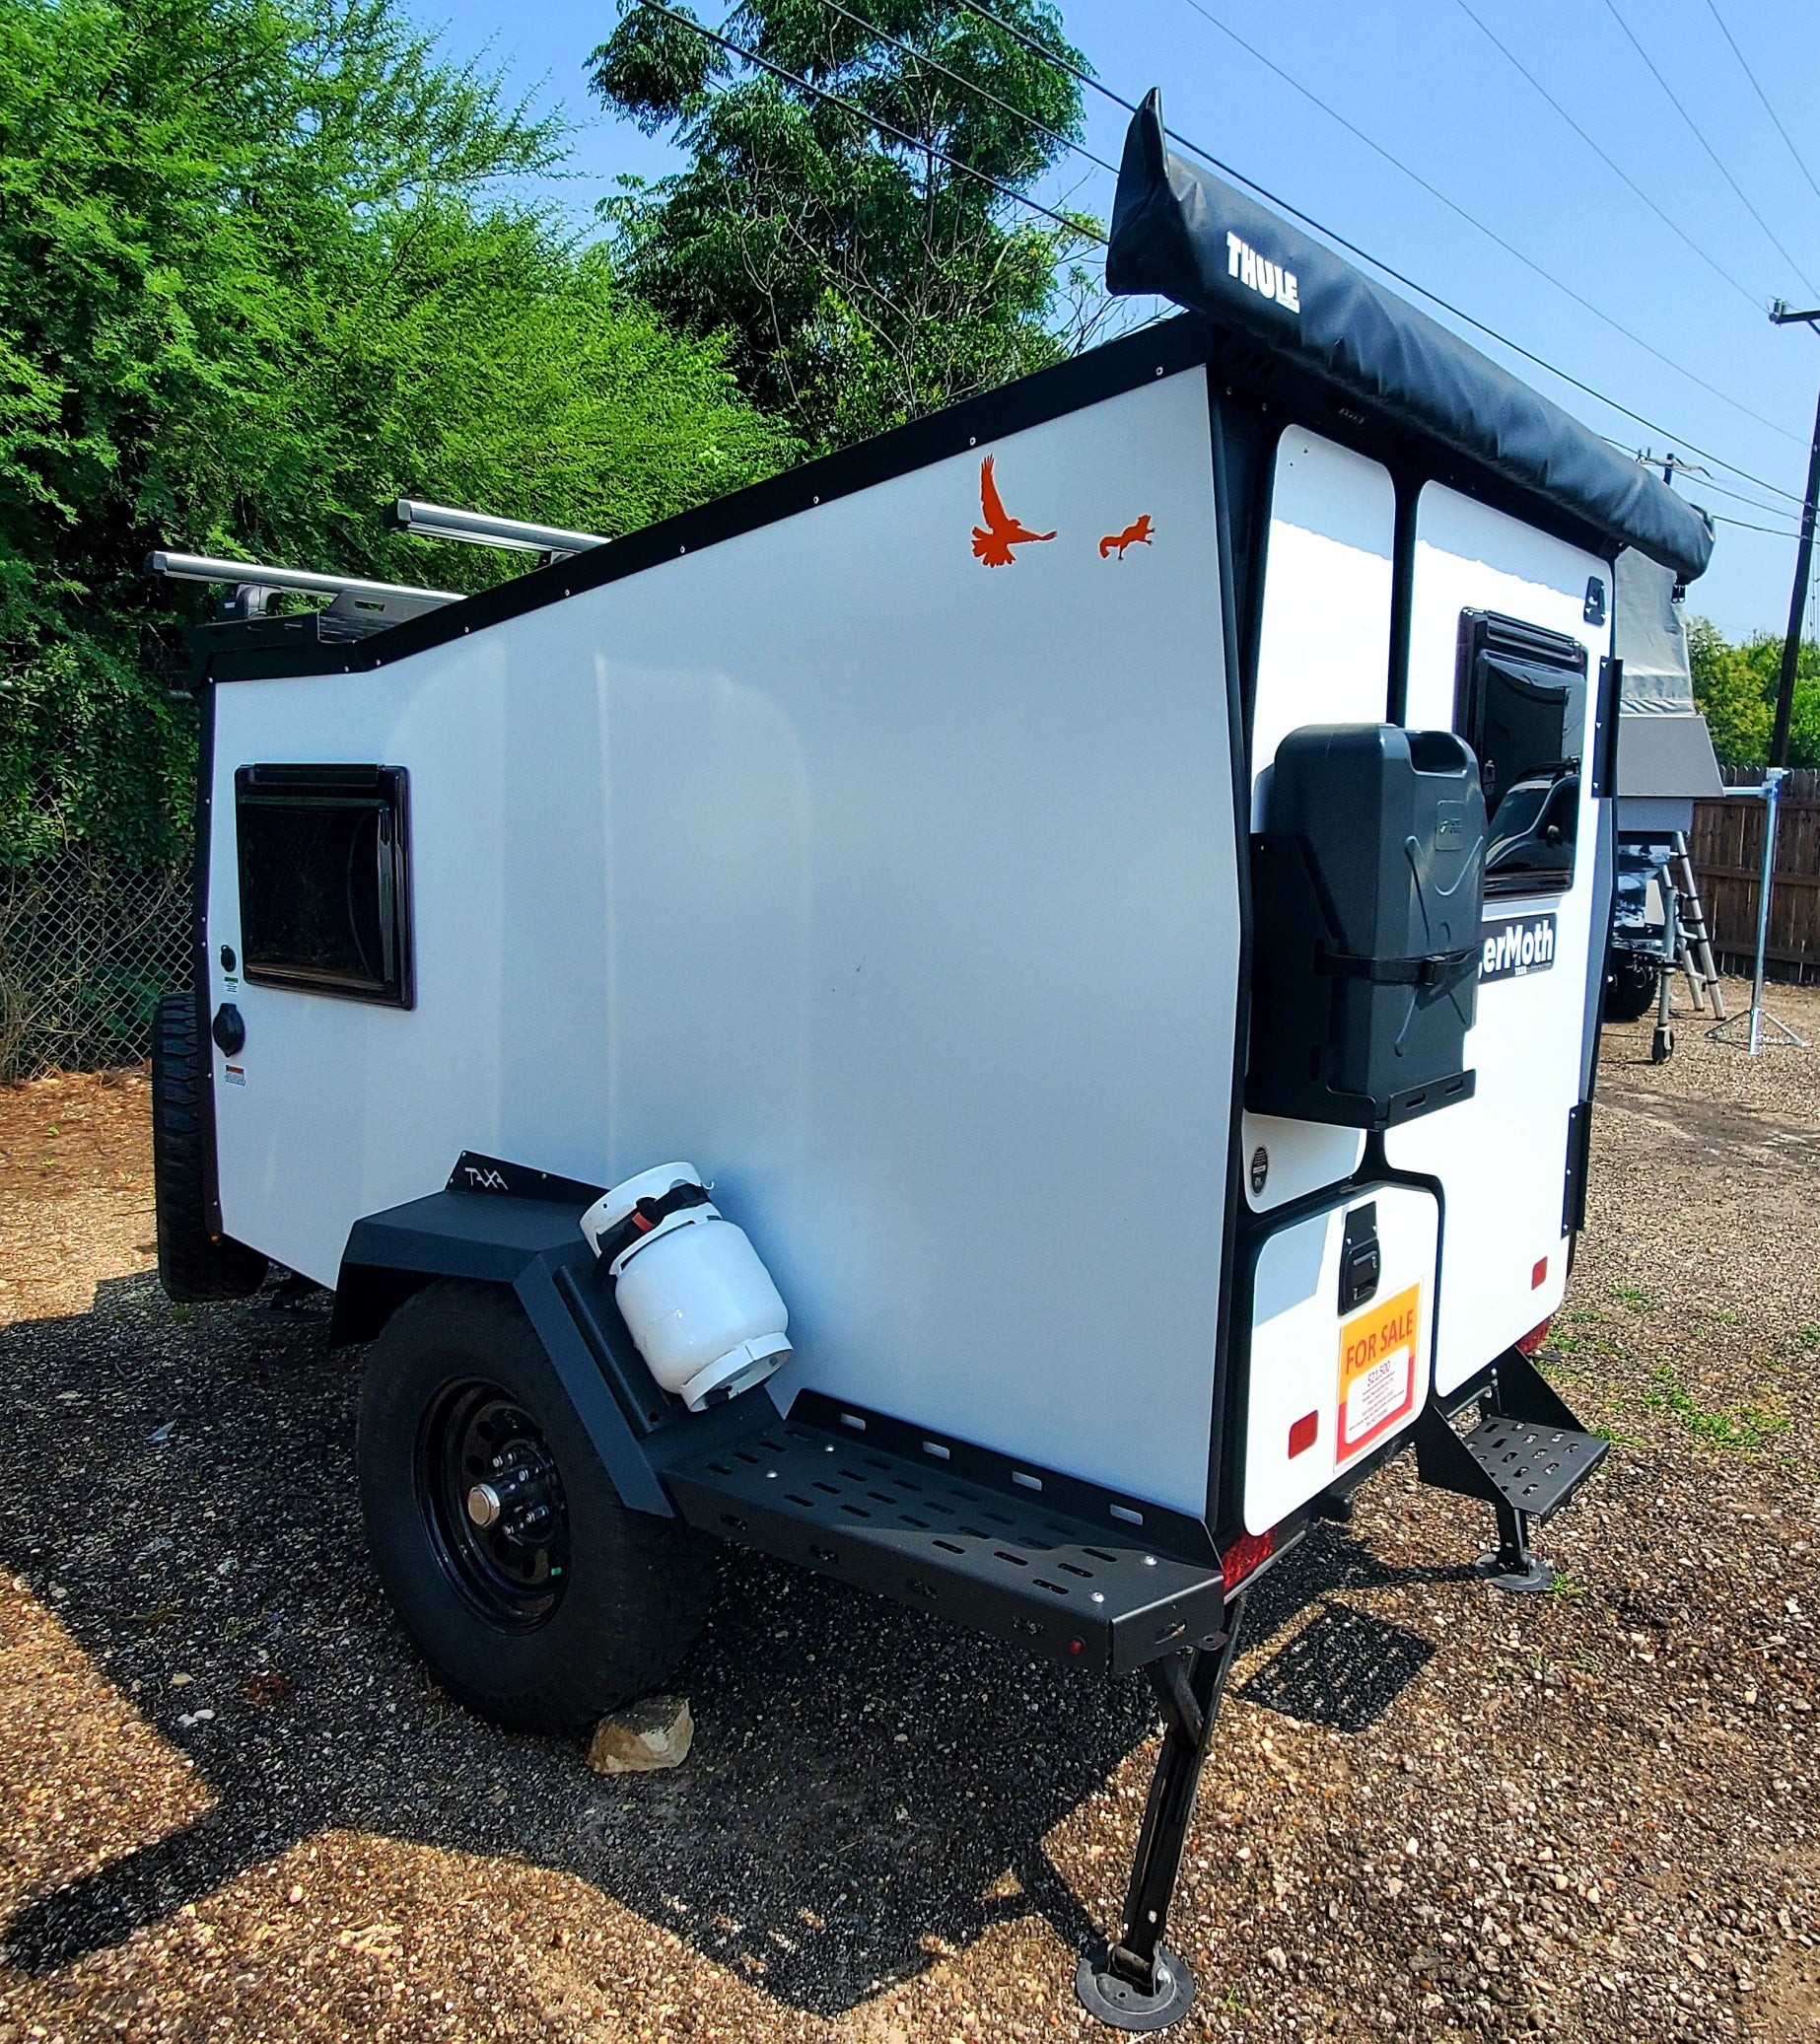 taxa outdoors standard tigermoth air condition offroad sleep inside trailer for sale near san antonio texas at hawkes outdoors 2102512882